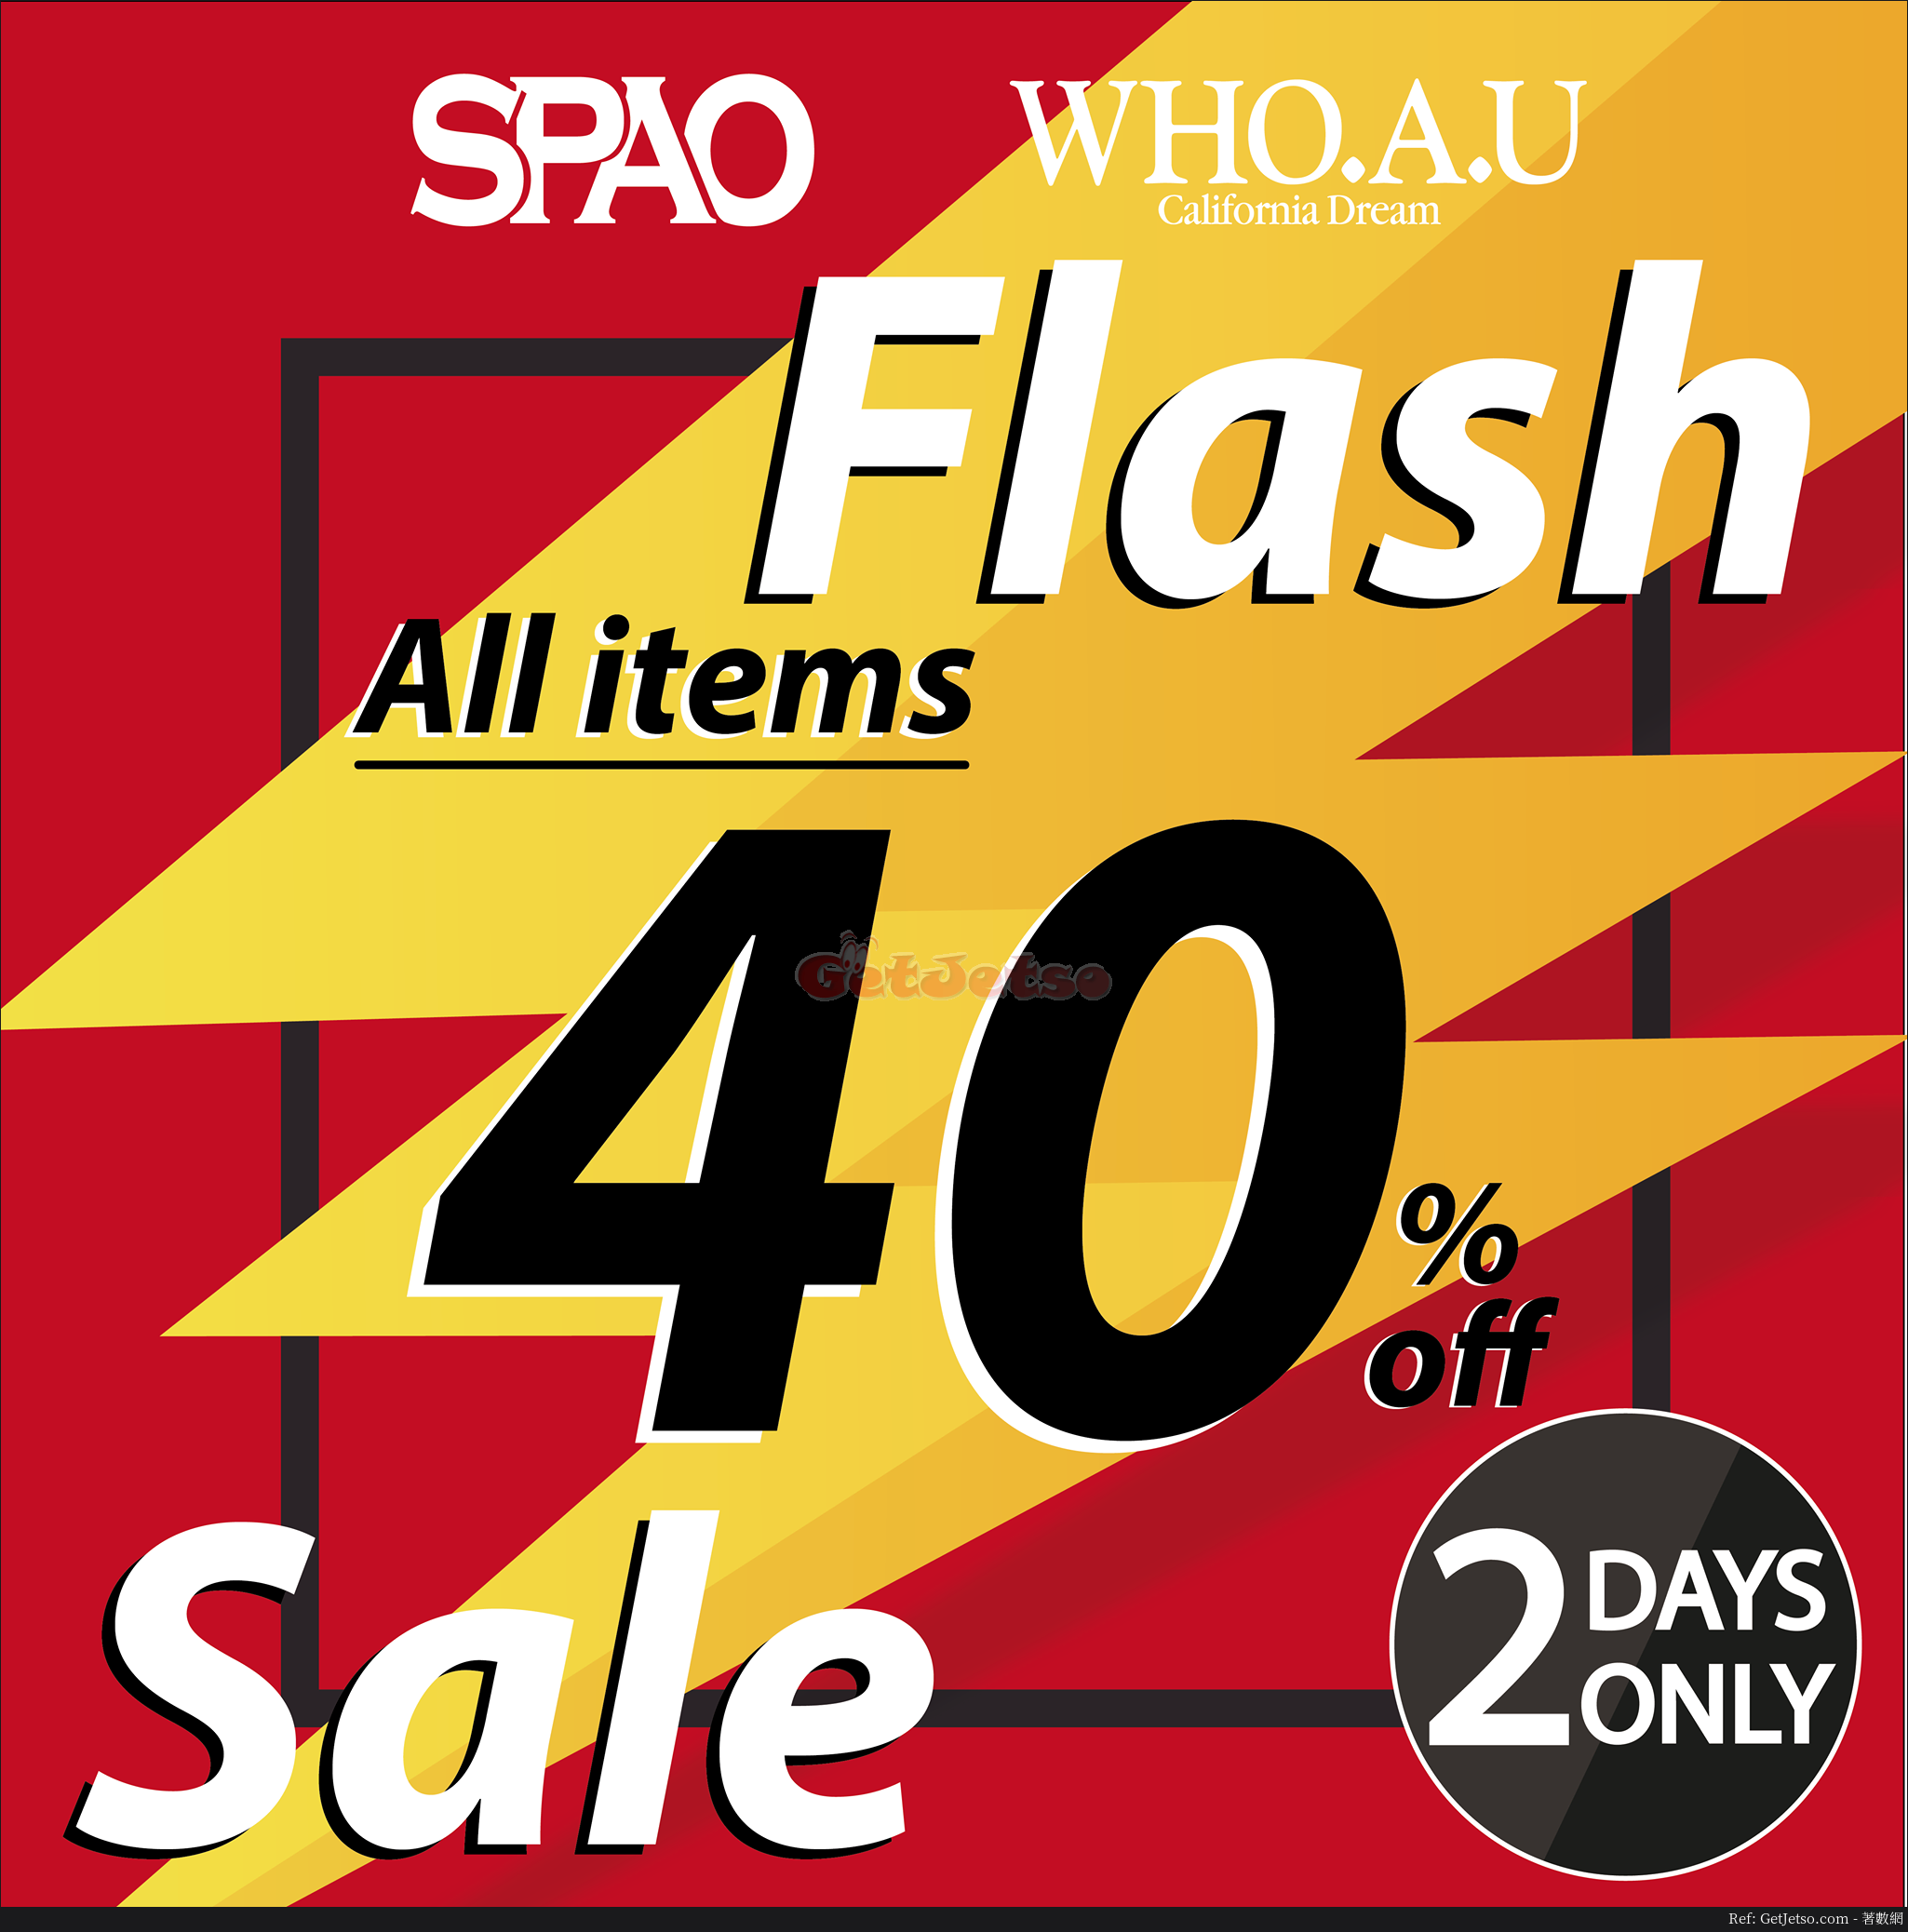 SPAO、WHO.A.U 全場6折Flash Sale 優惠(18年9月29日)圖片1